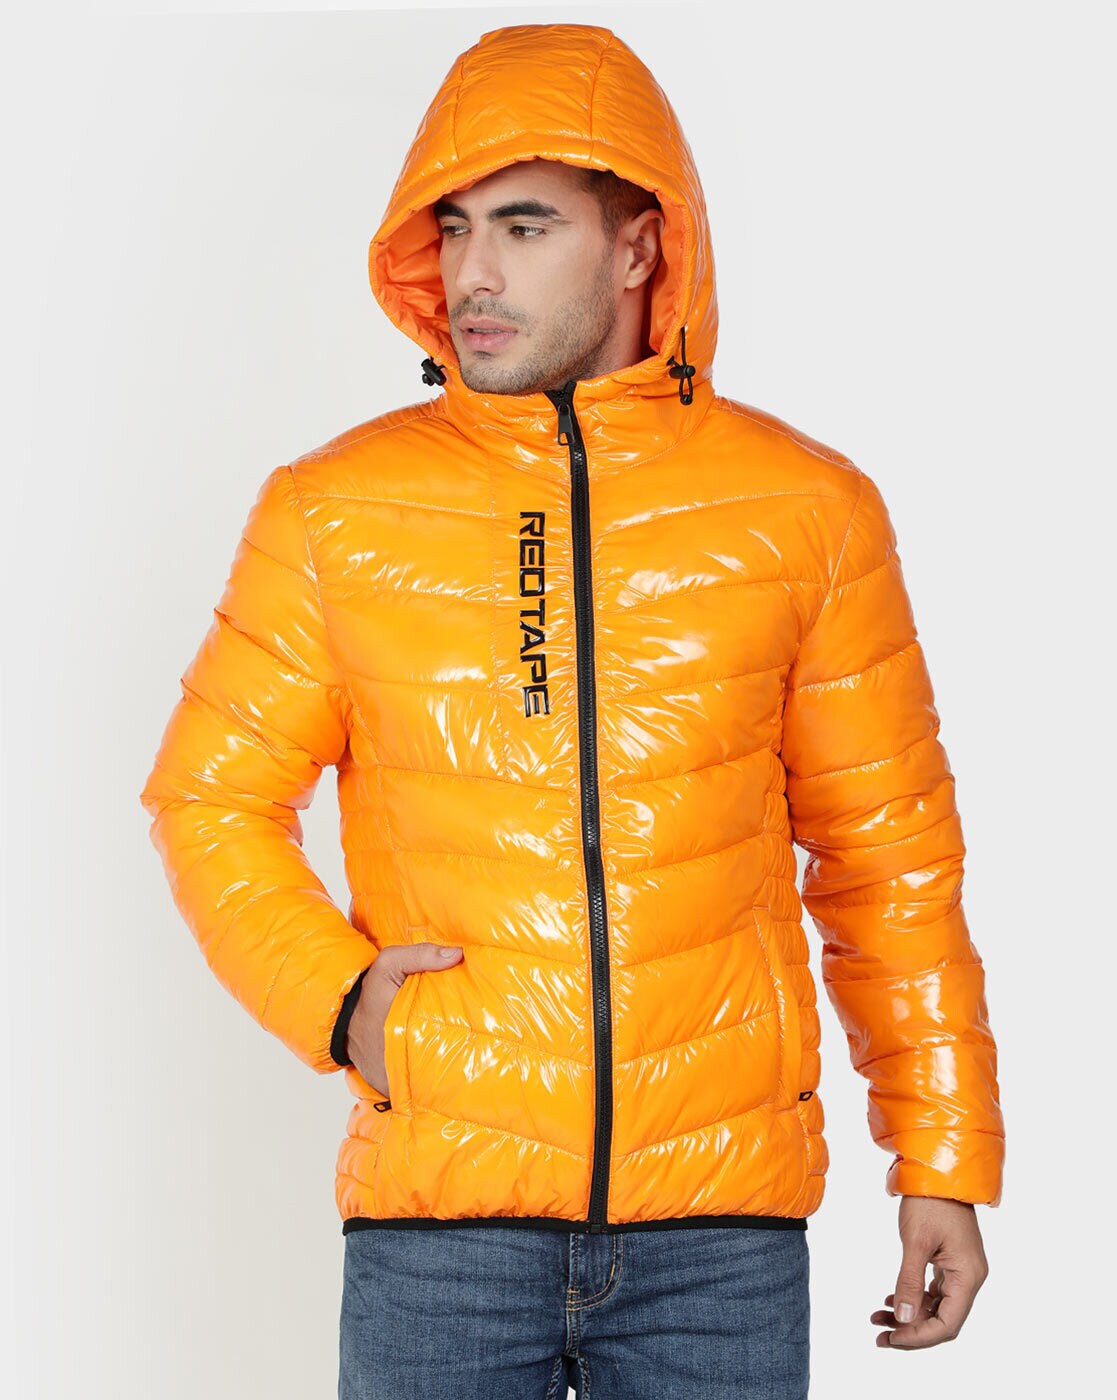 Buy EKLENTSON Sherpa Jacket Men Oversized Buffalo Cycling Fishing Sport  Down Jacket, Orange, XX-Large at Amazon.in